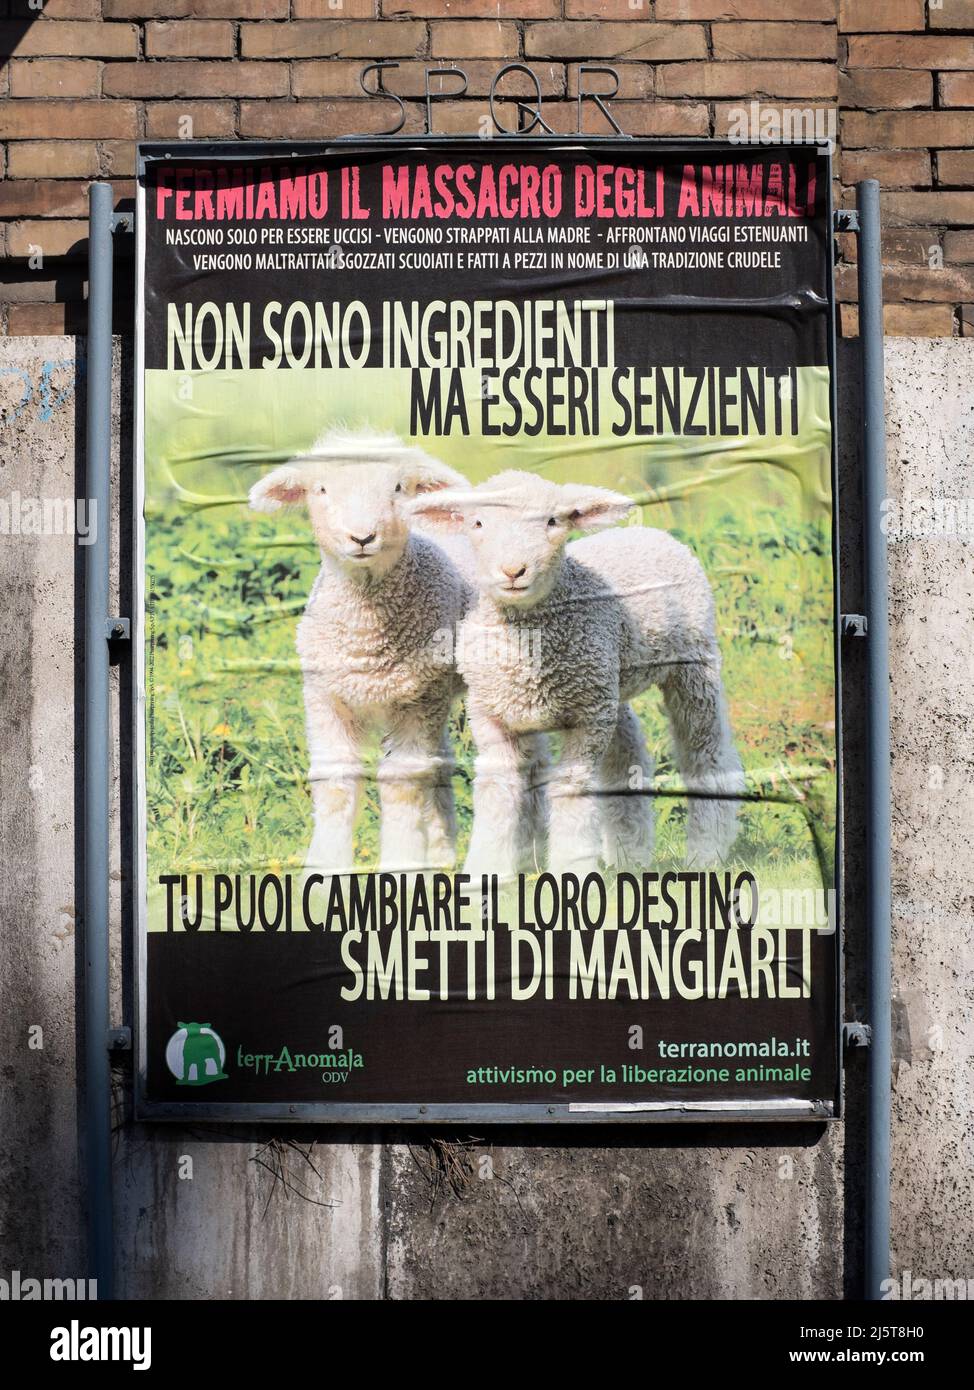 Animal Welfare Poster on Street Billboard in Rome Italy Stock Photo - Alamy